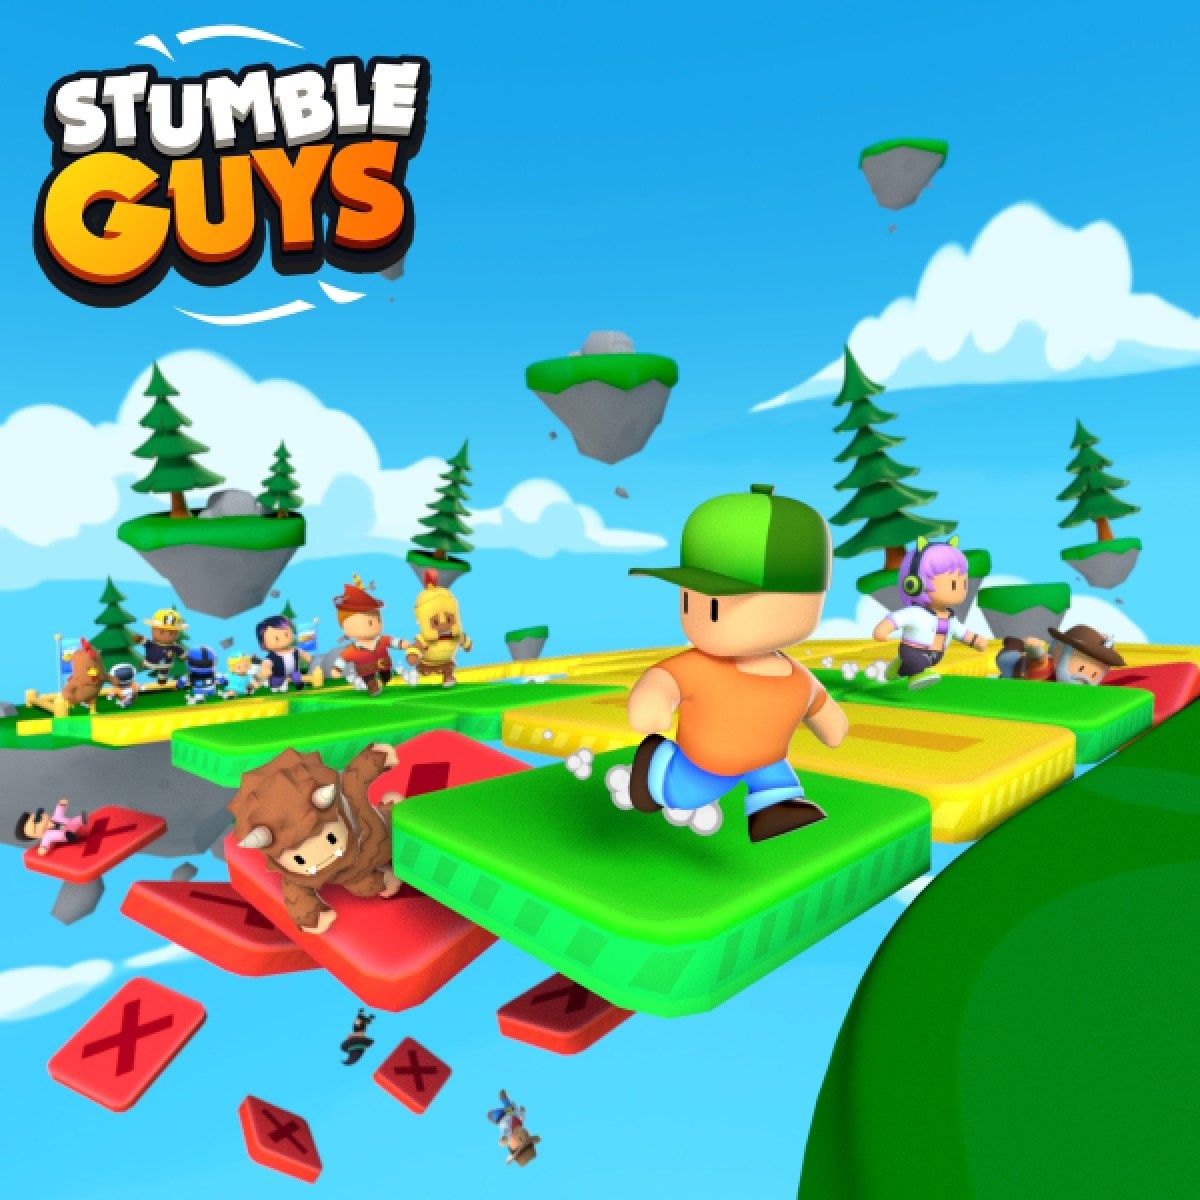 Stumble Guys leaps over $80m lifetime revenue, 270m downloads 